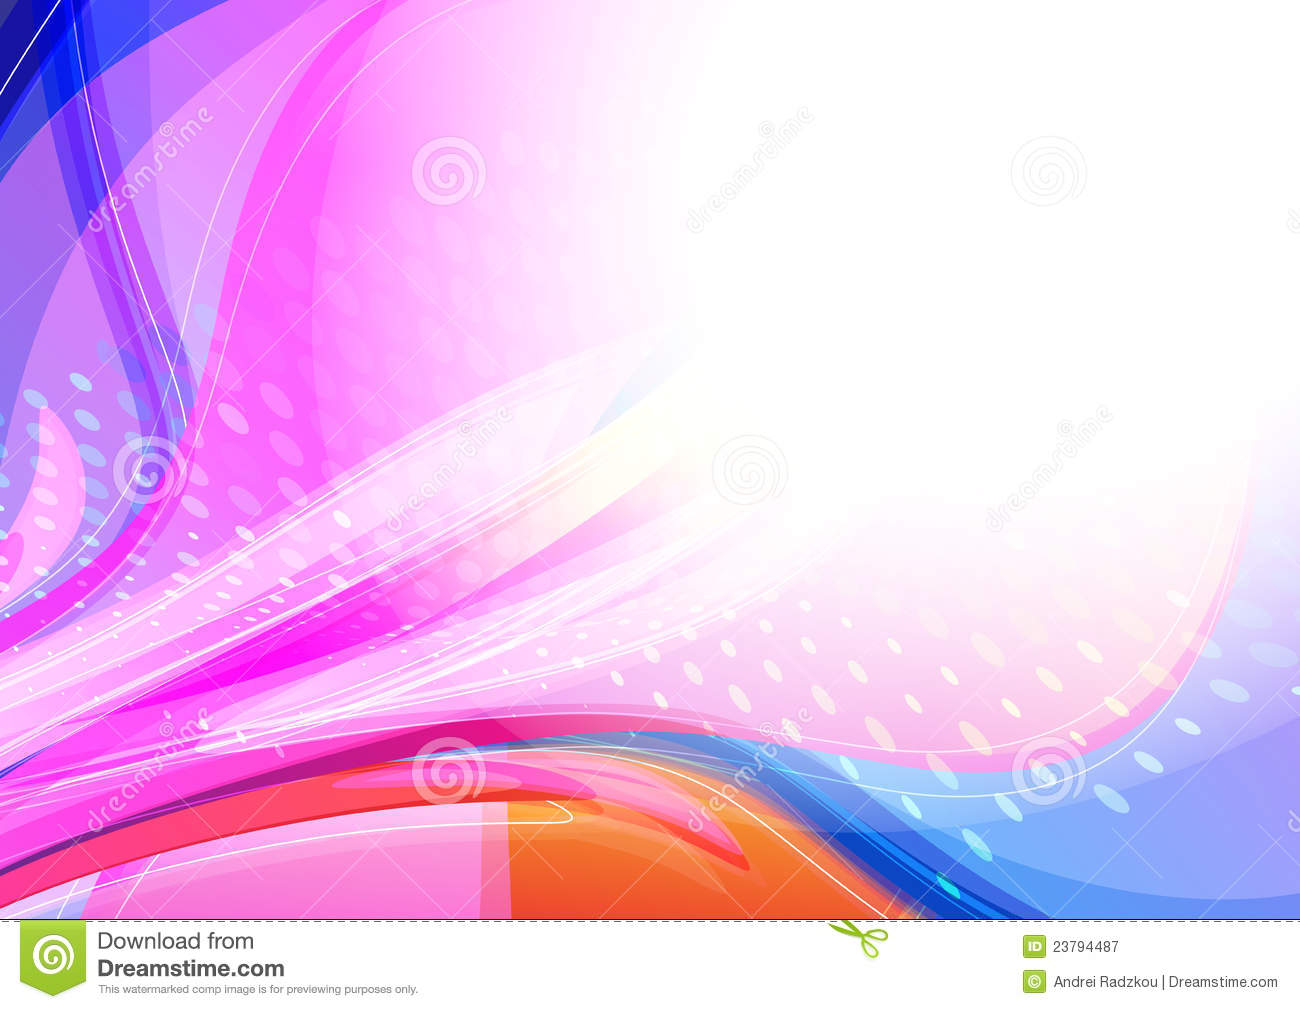 70+] Bright Colored Backgrounds - WallpaperSafari